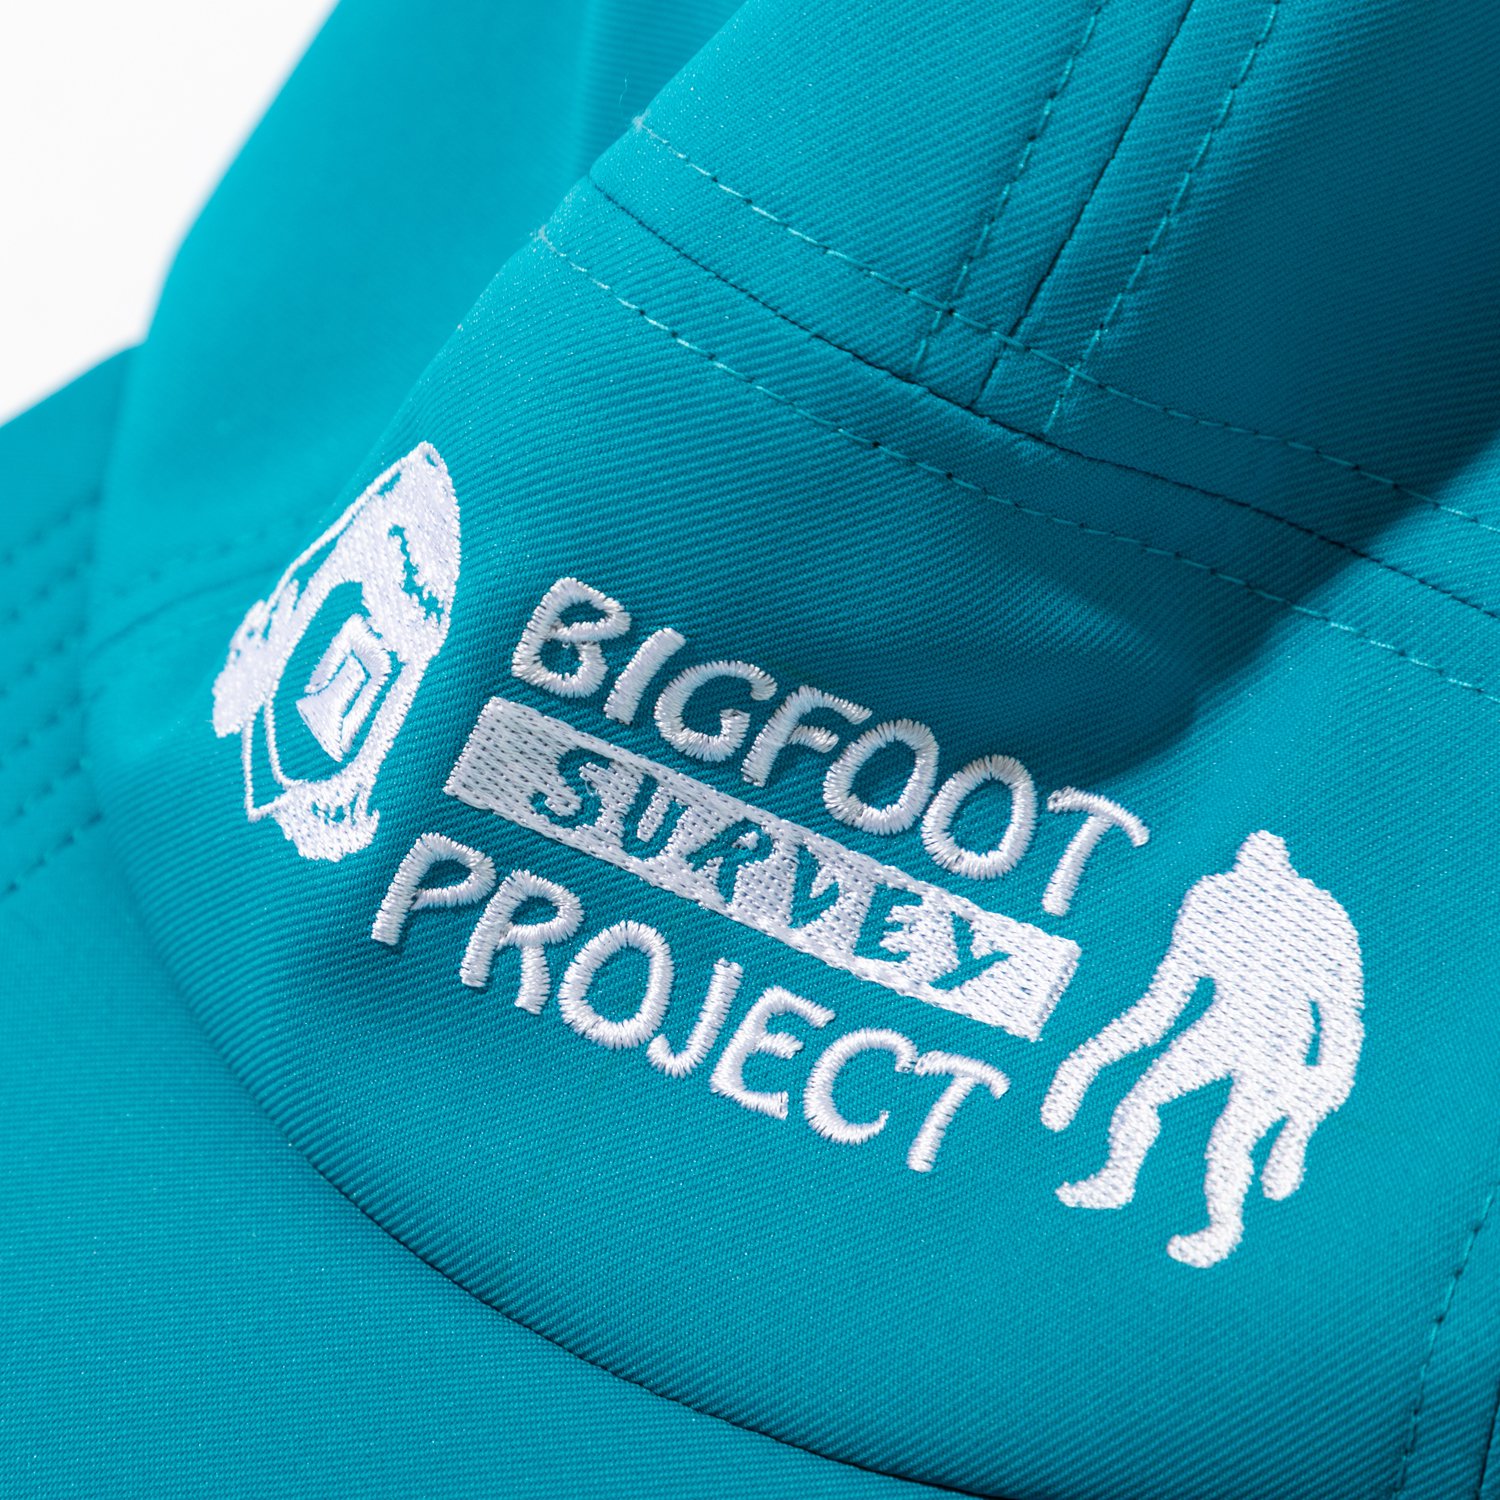 BIGFOOT SURVEY PROJECT LOGO JET CAP by Halo Commodity - TACOMA 